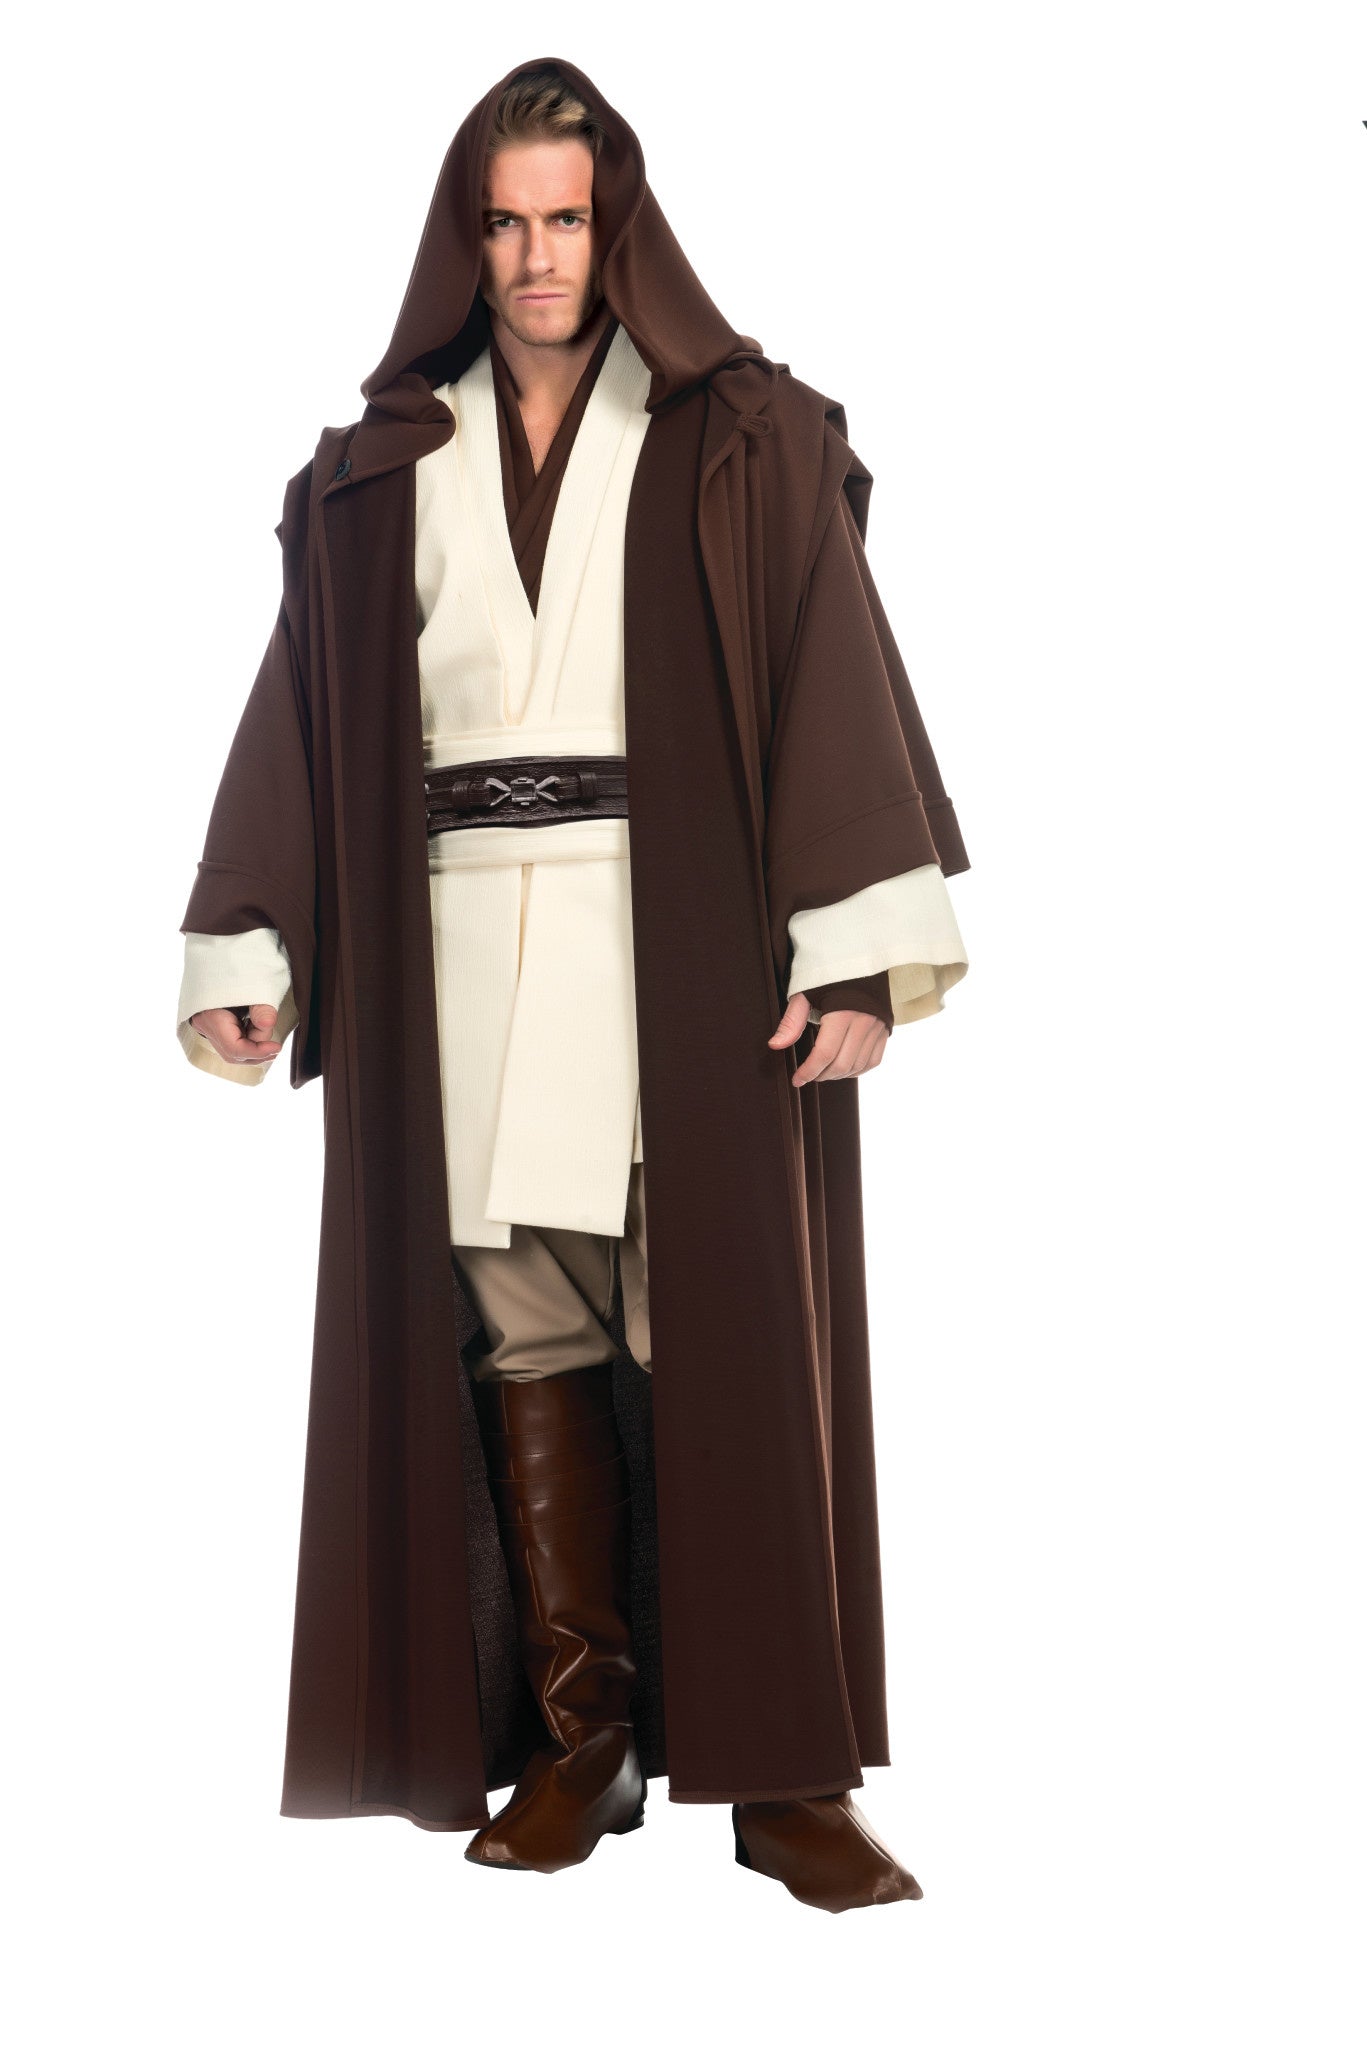 Men's Super Deluxe Obi Wan Kenobi Costume